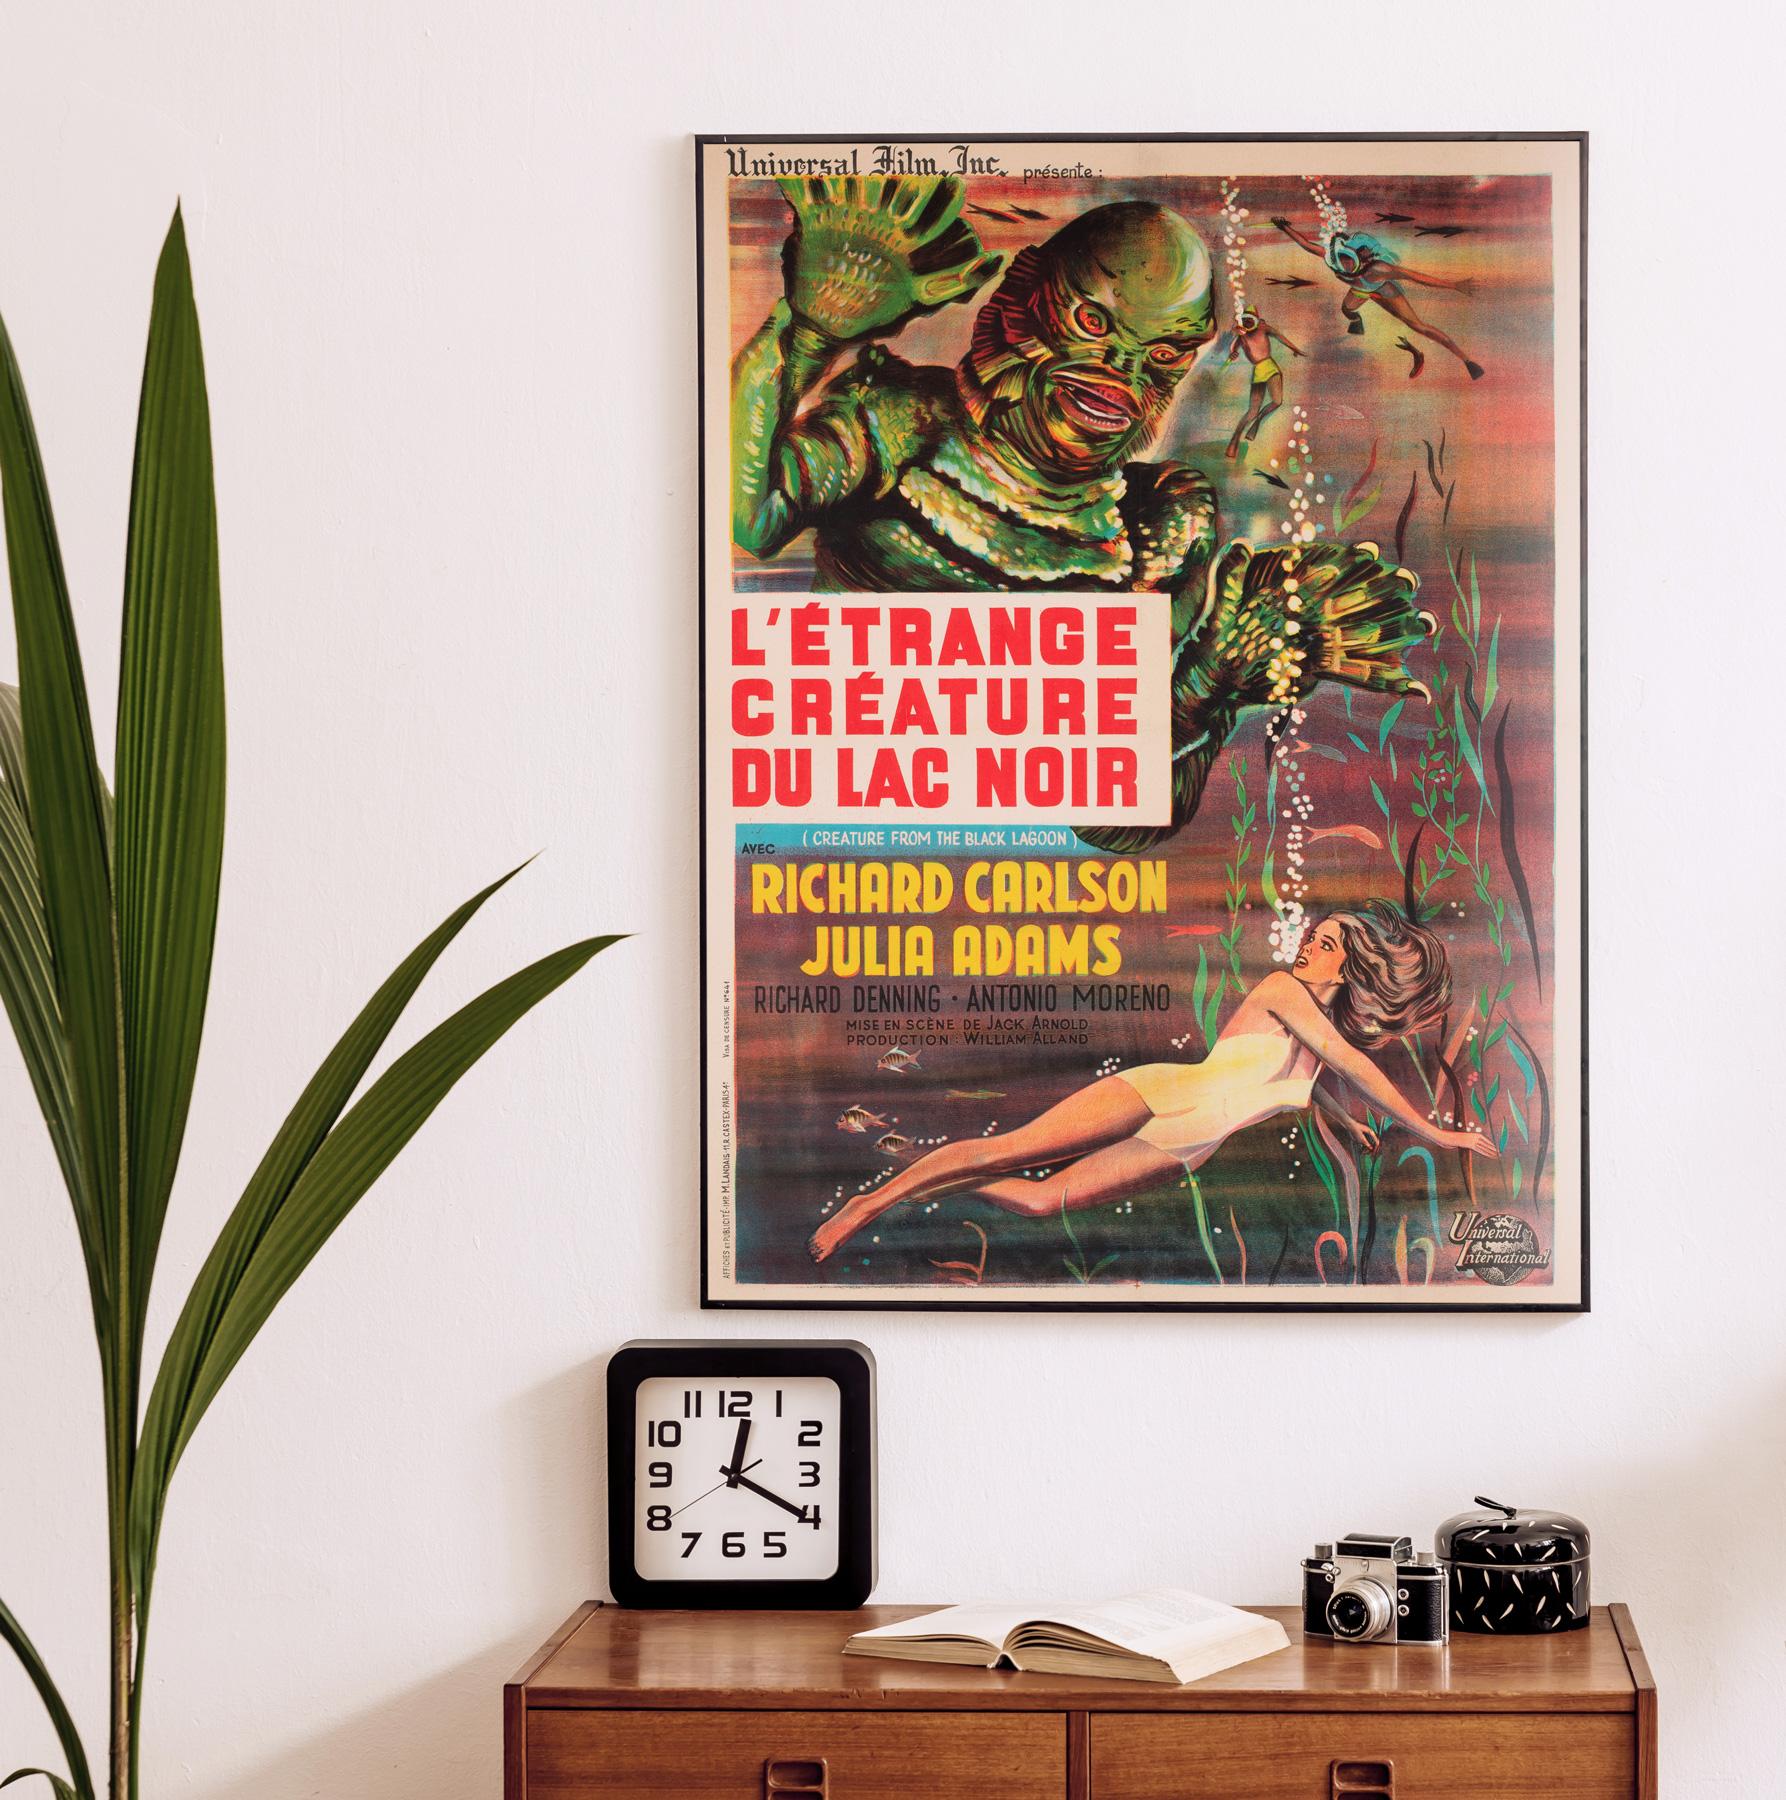 Stunning original Cote d'Azur 1968 SNCF French Railways Travel poster designed by Bernard Villemot.

The SNCF (Société nationale des chemins de fer français) is France's national state-owned railway company and was founded in 1938.

A lovely design